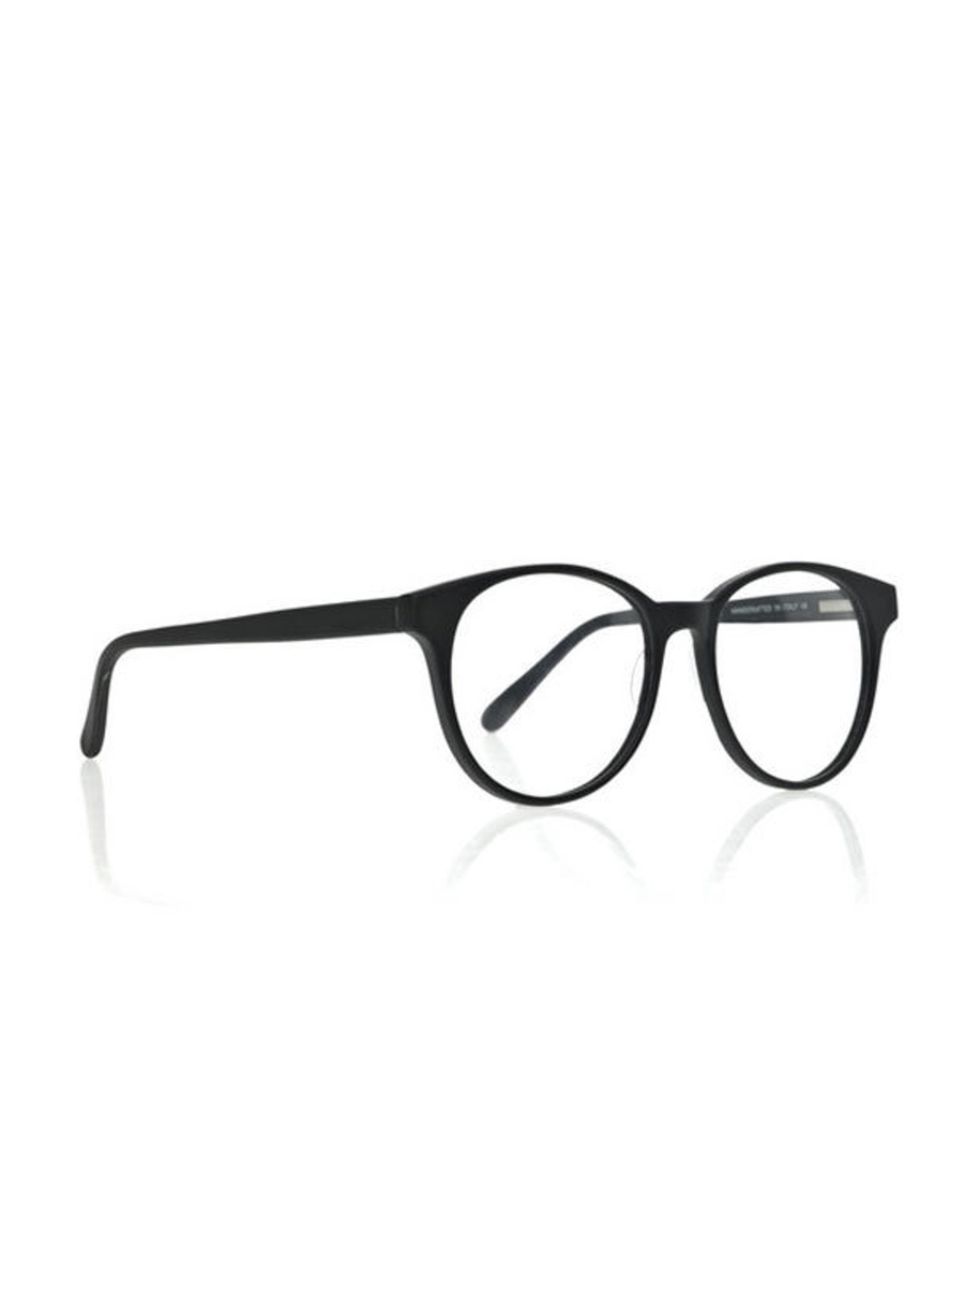 <p><a href="http://shop.prismlondon.com/collections/optical-glasses/products/rio-matte-black-optical-glasses">Prism</a> 'Rio' matt black round frame acetate optical glasses, £210</p>